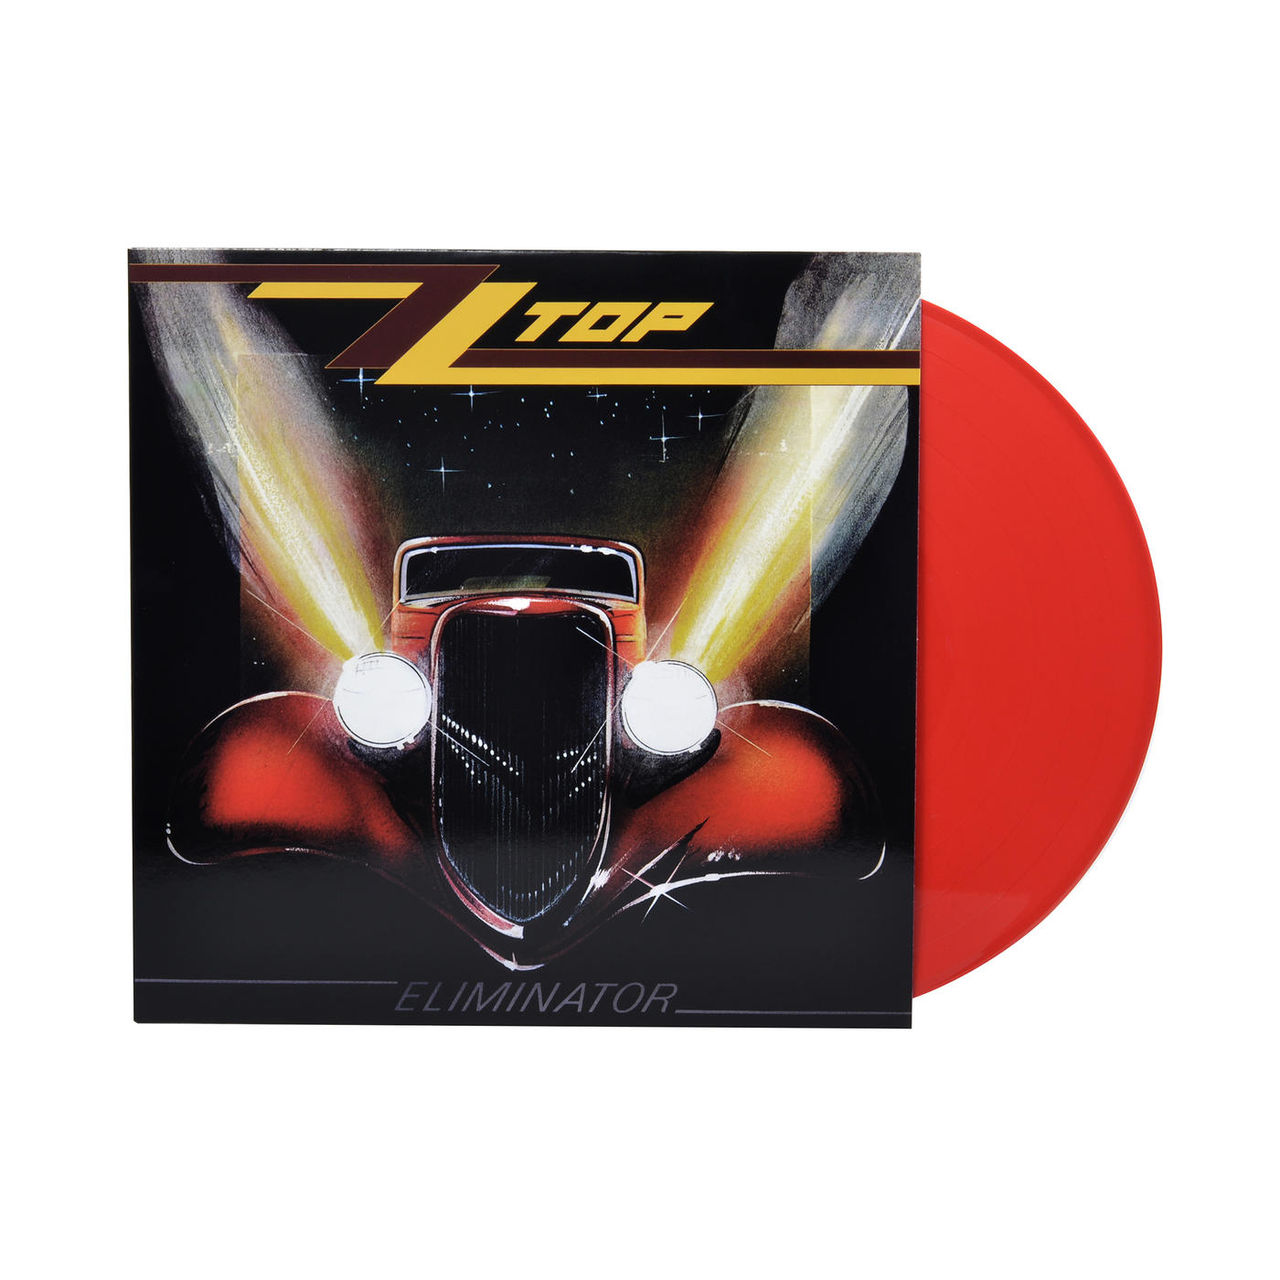 ZZ Top - Eliminator: Limited Edition Red Vinyl LP